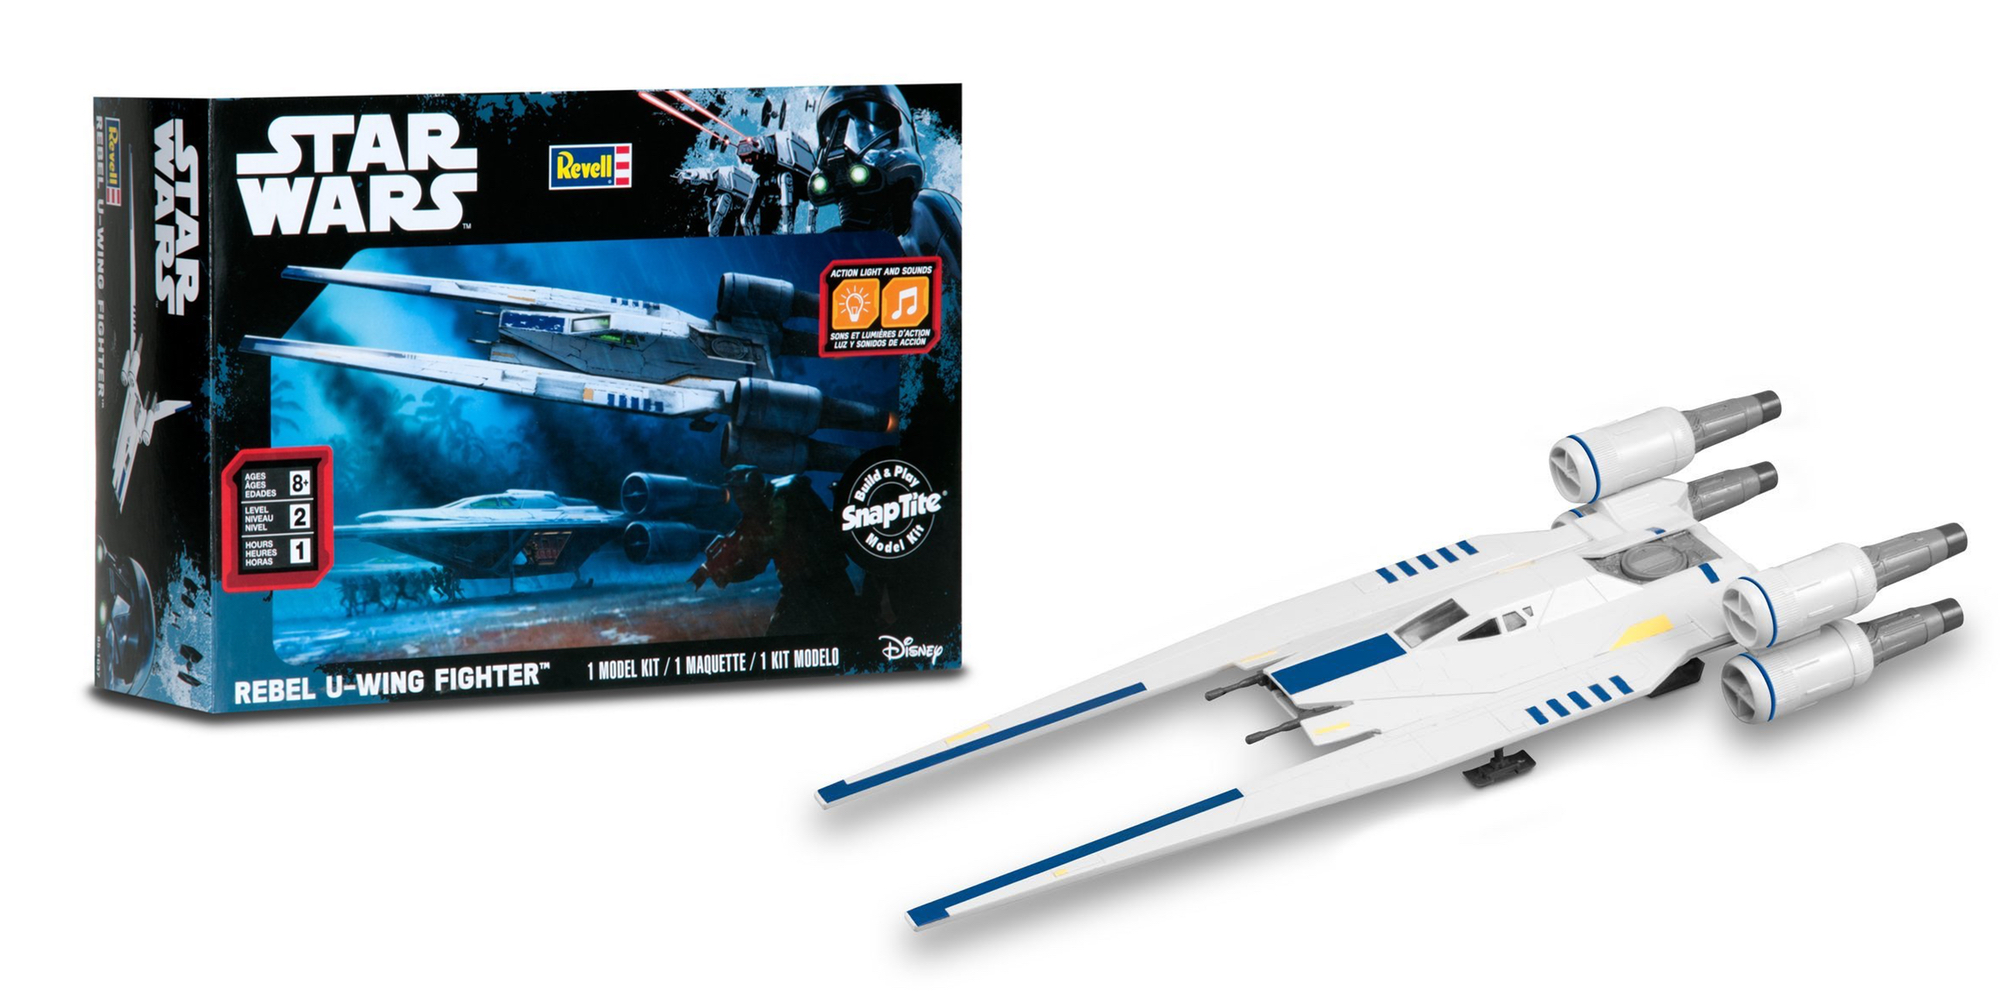 Revell SnapTite Star Wars U-wing Fighter Building Kit under $9 (Orig. $20)